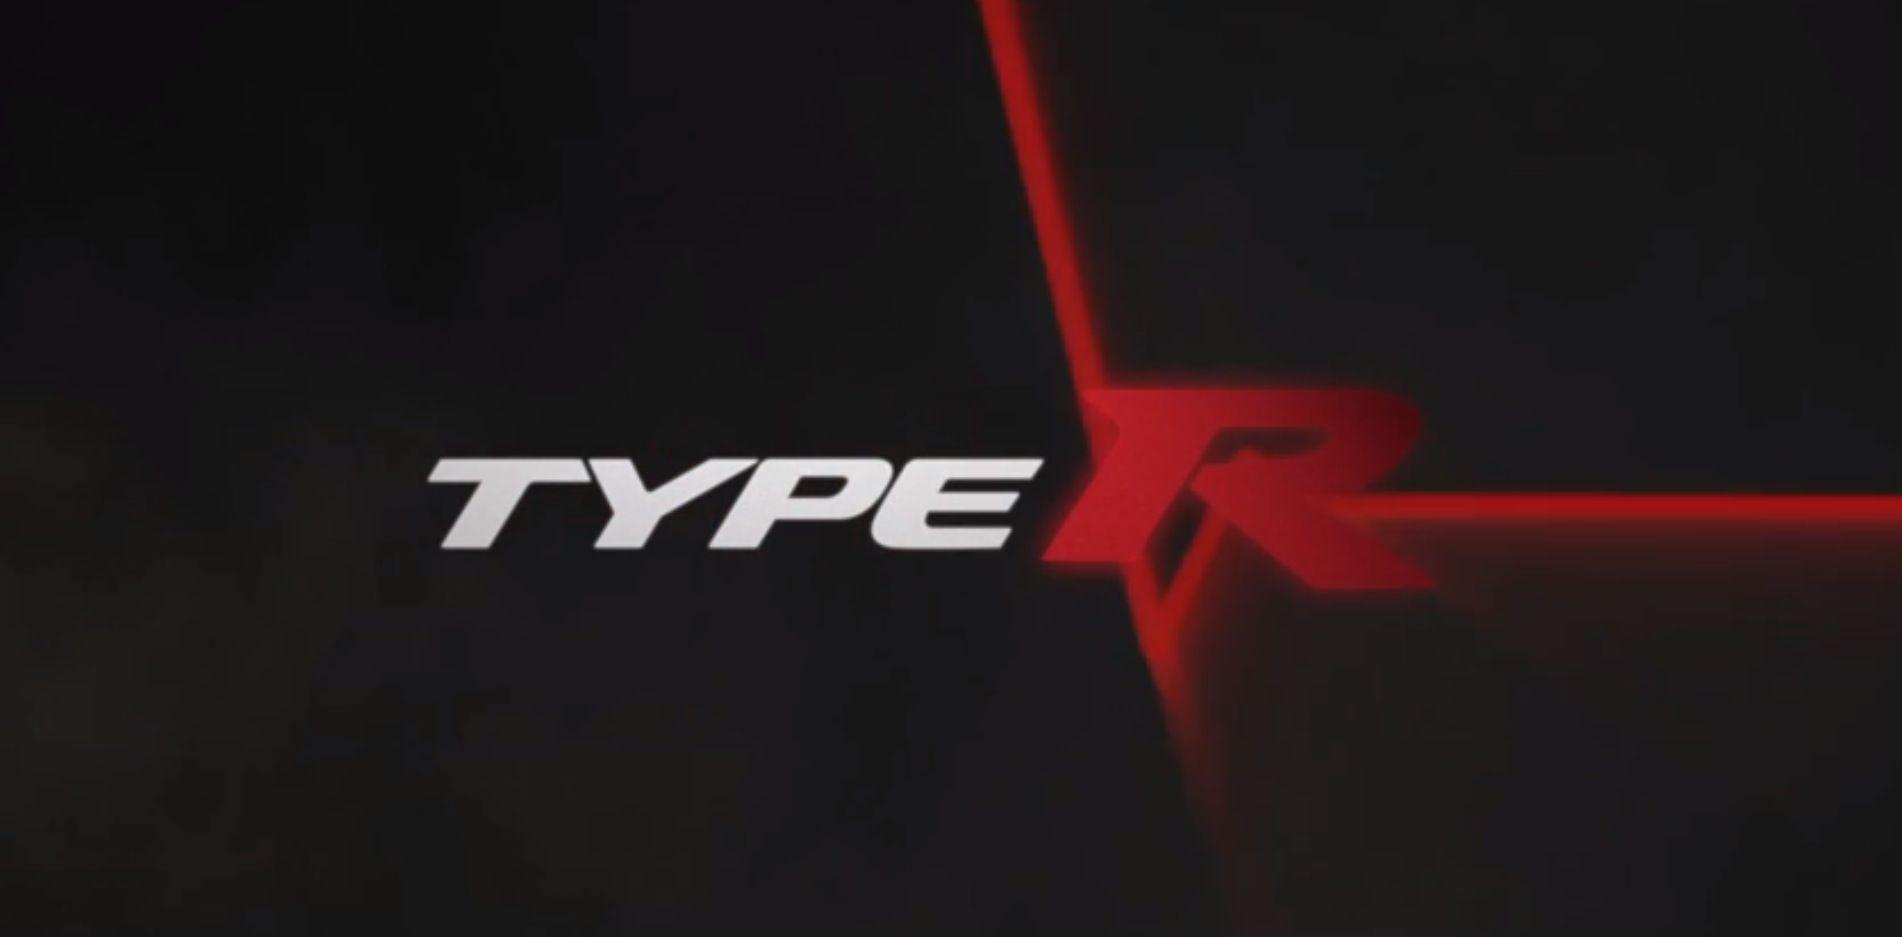 Honda Civic Type R Logo - Honda Civic Type R will Debut on March 2